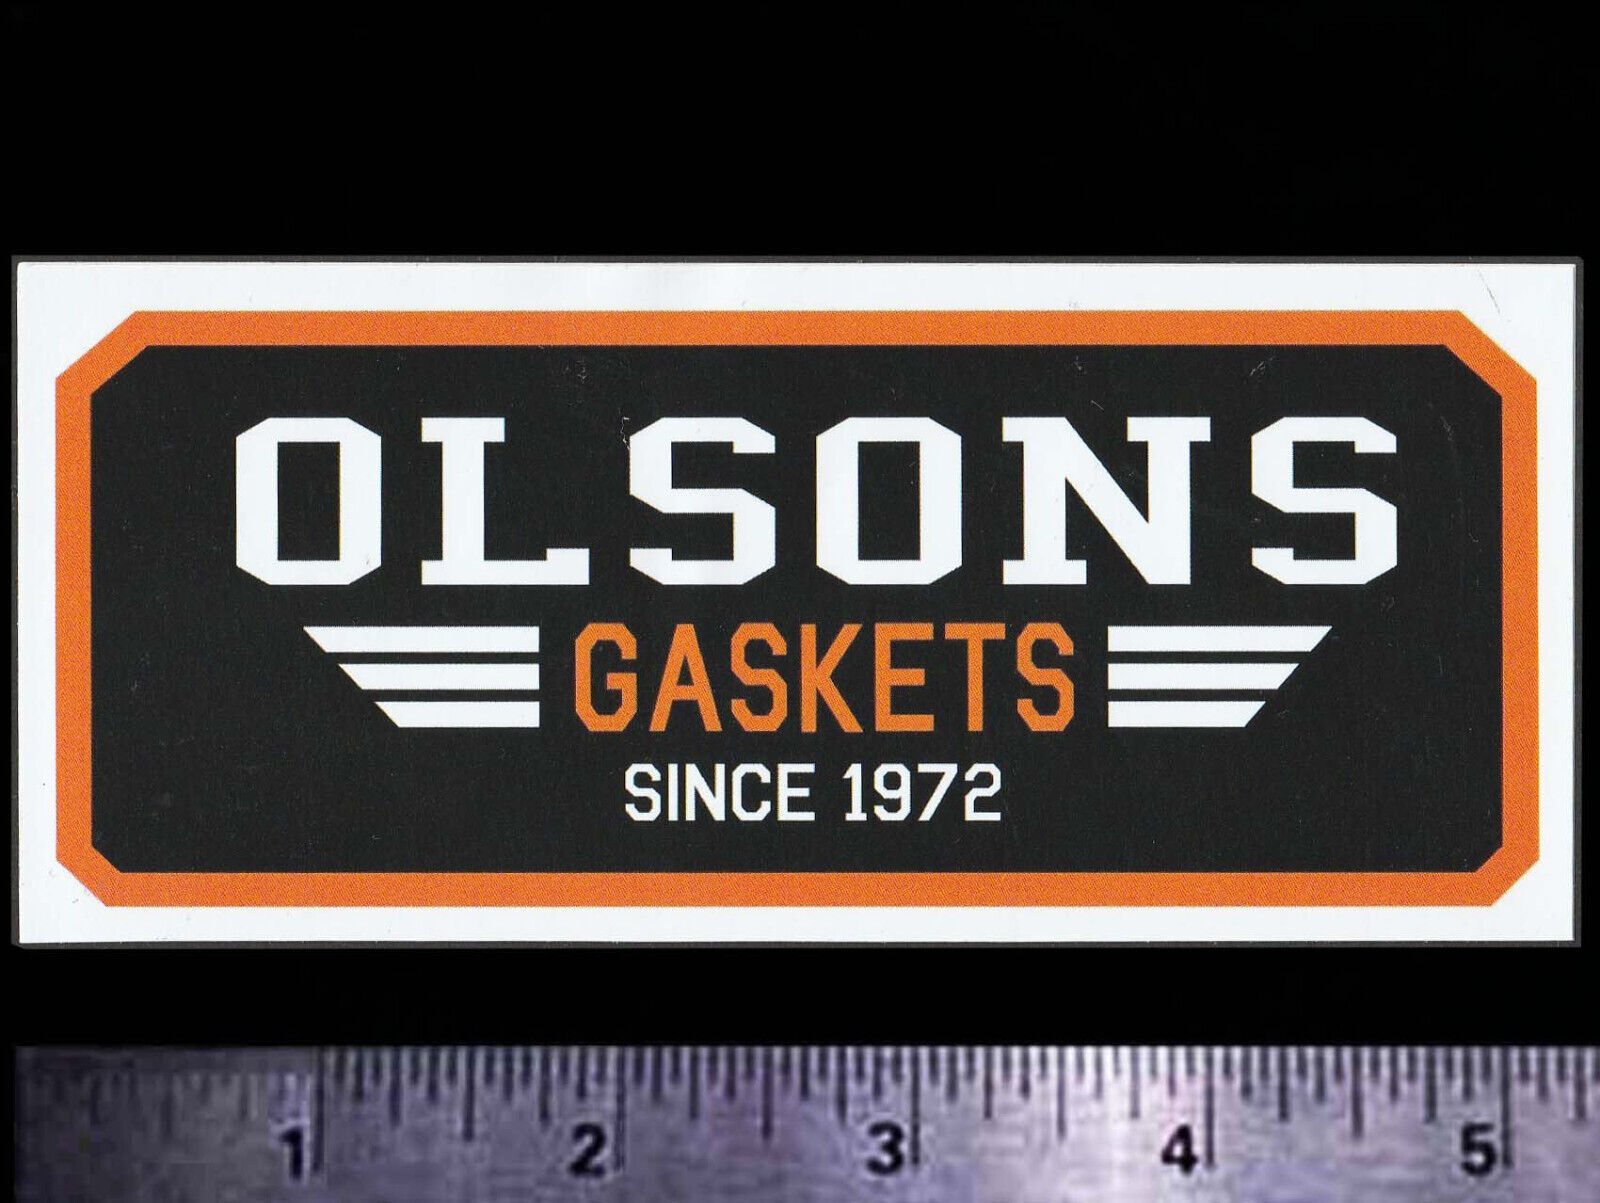 OLSON Gaskets - Since 1972 - Original Vintage Racing Decal/Sticker